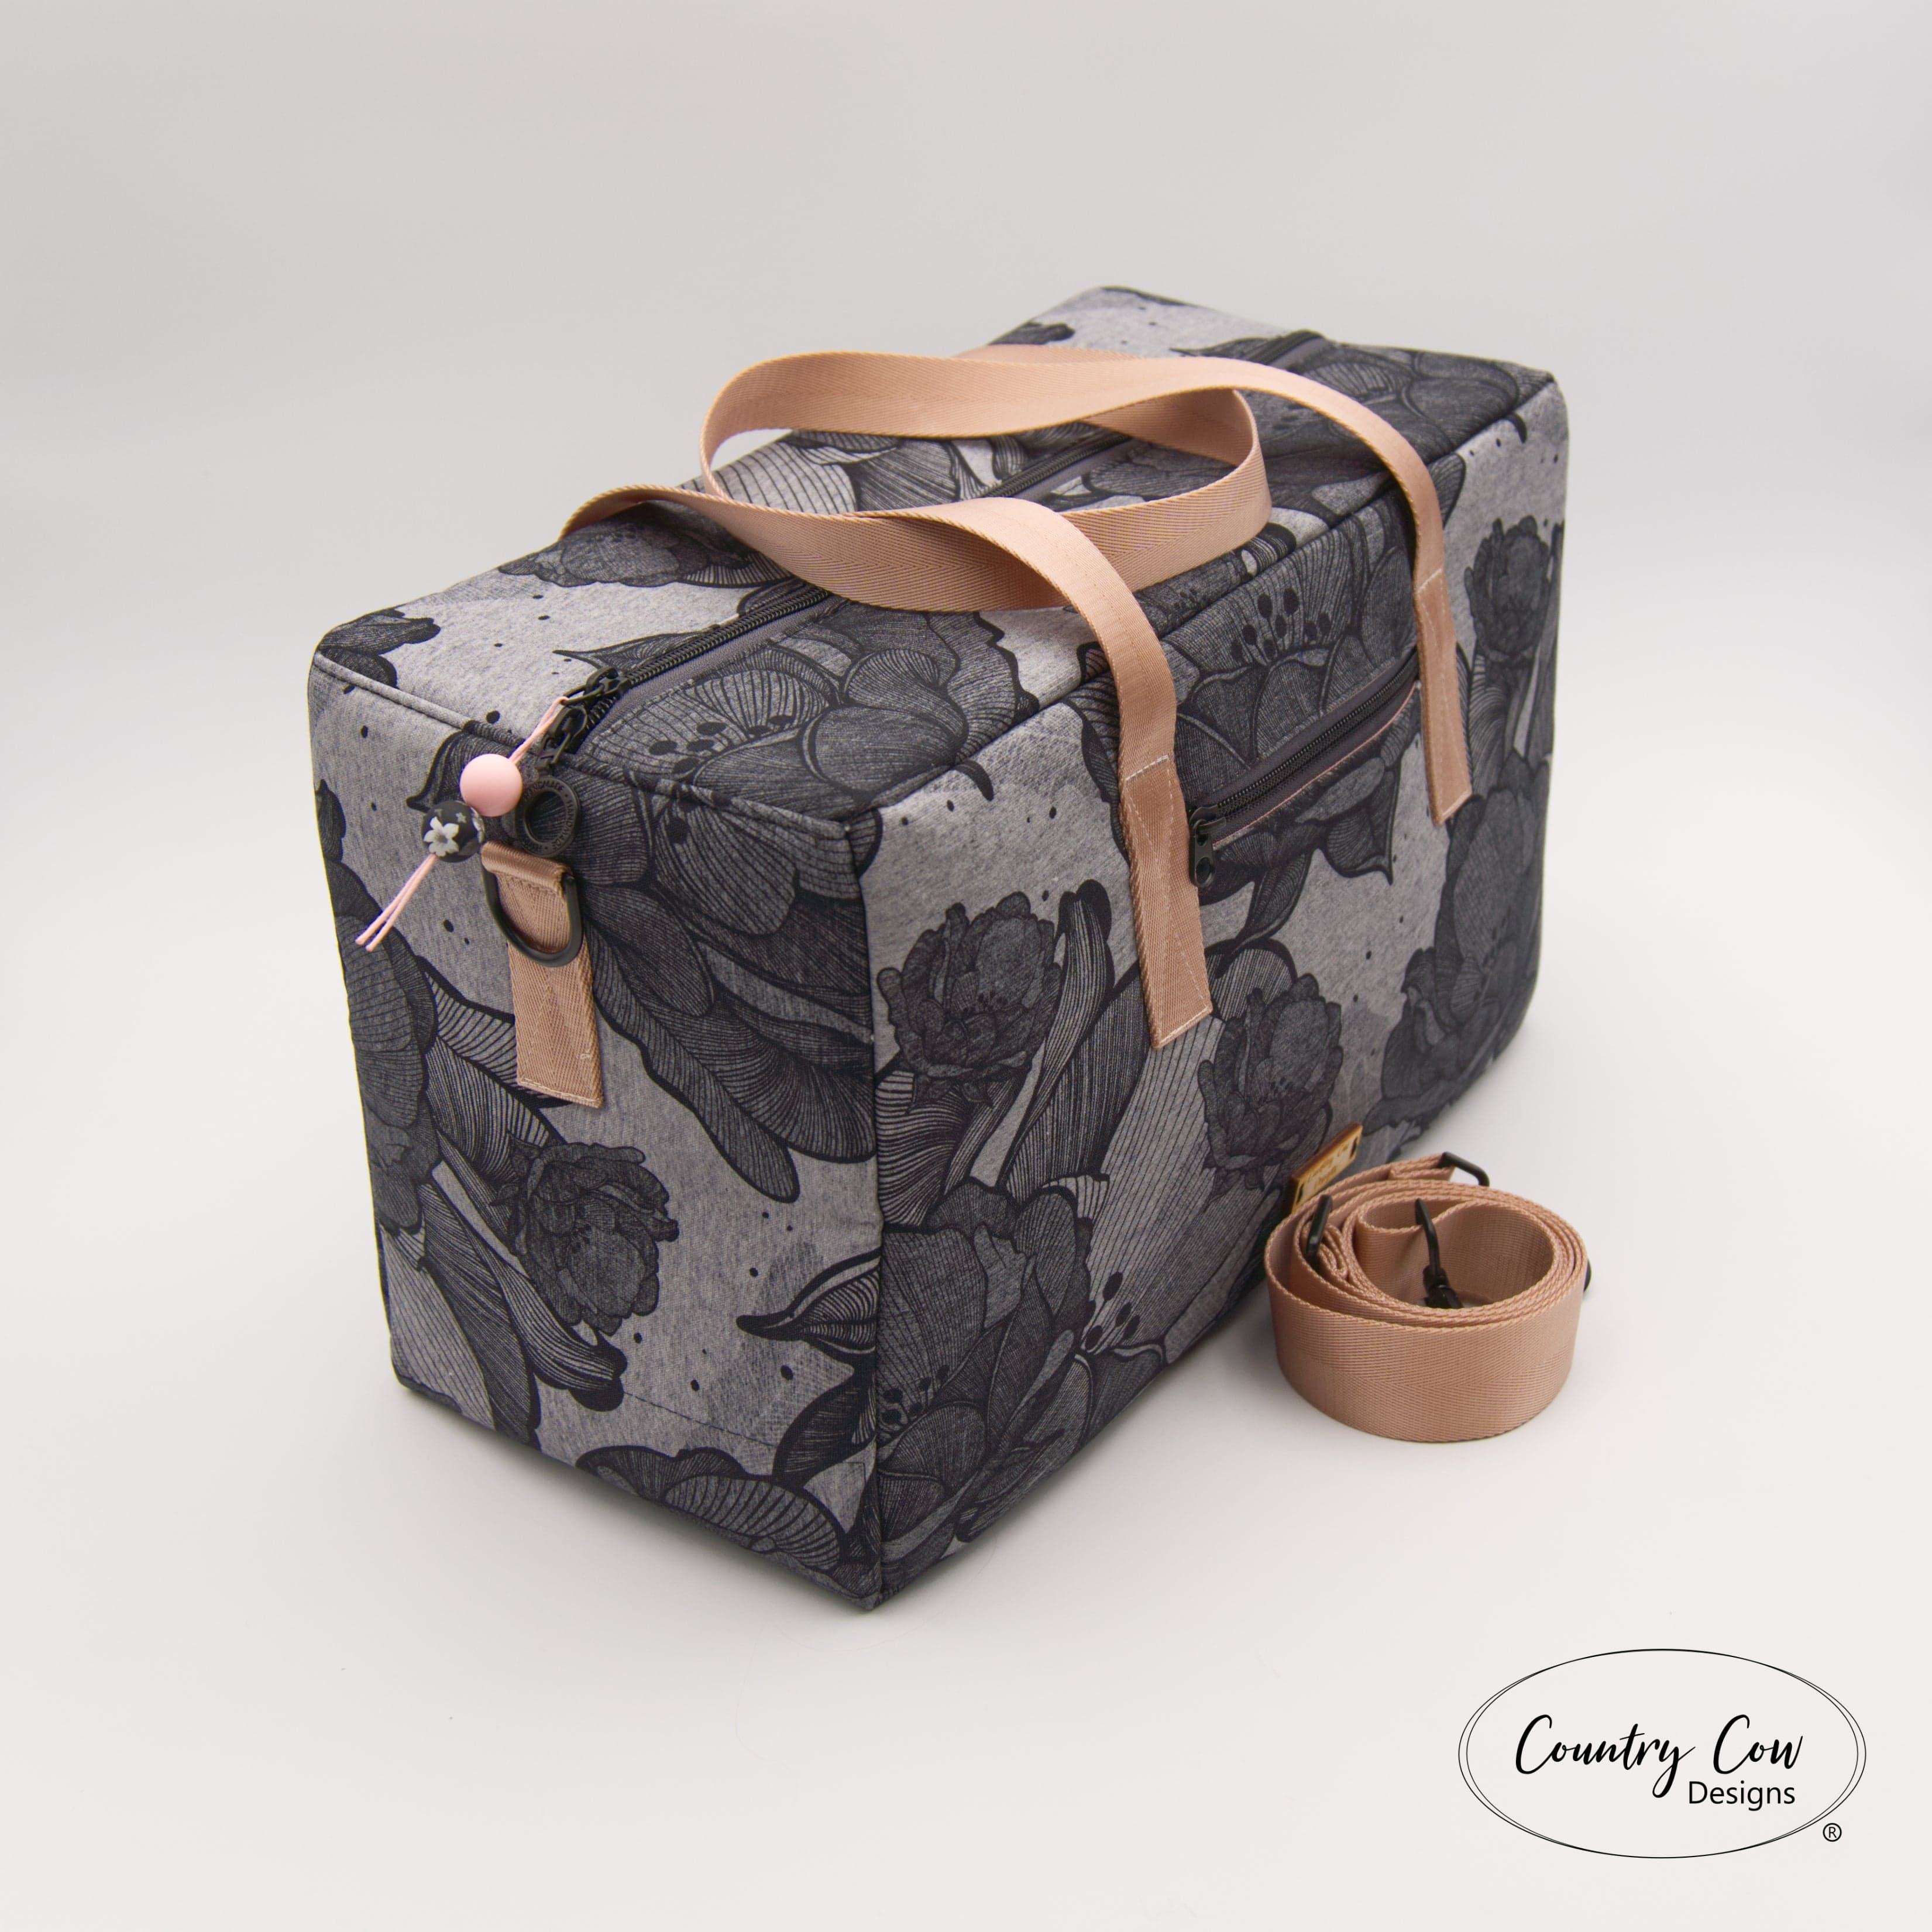 Kiwi Bagineers Bag Kit Travel Light Duffel Bag Hardware Kit- Country Cow designs